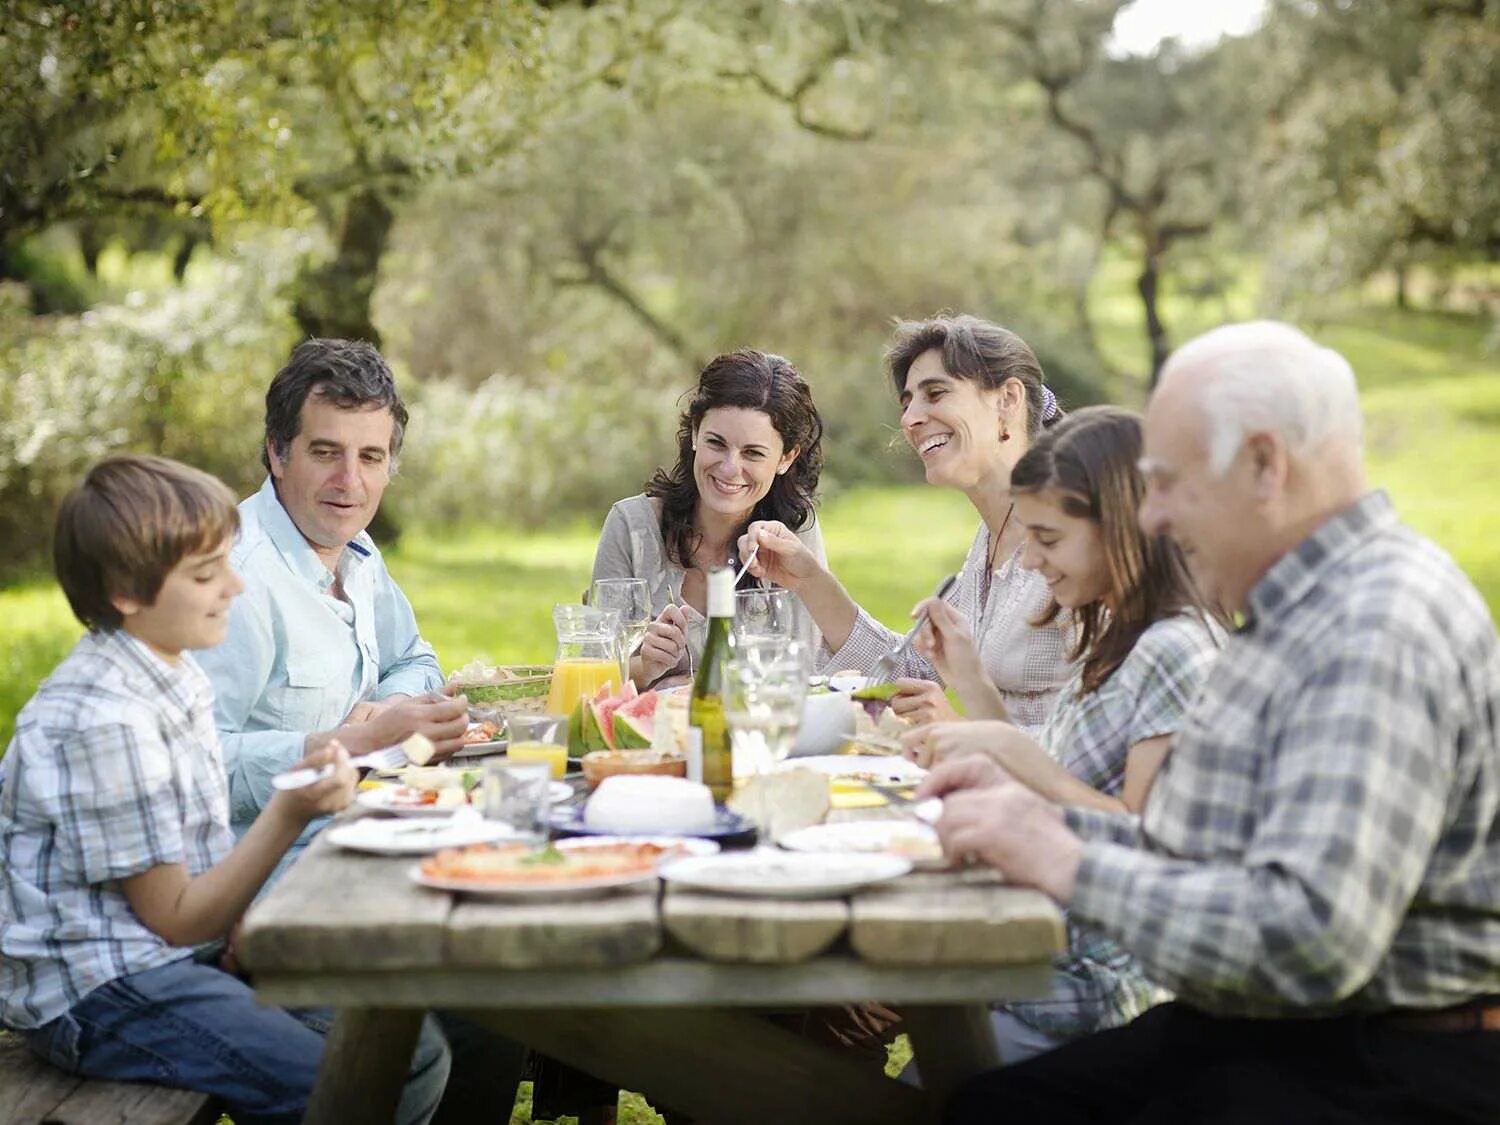 Семья на пикнике с друзьями. Пикник с друзьями на природе. Дружная семья за столом. Семья на пикнике за столом.